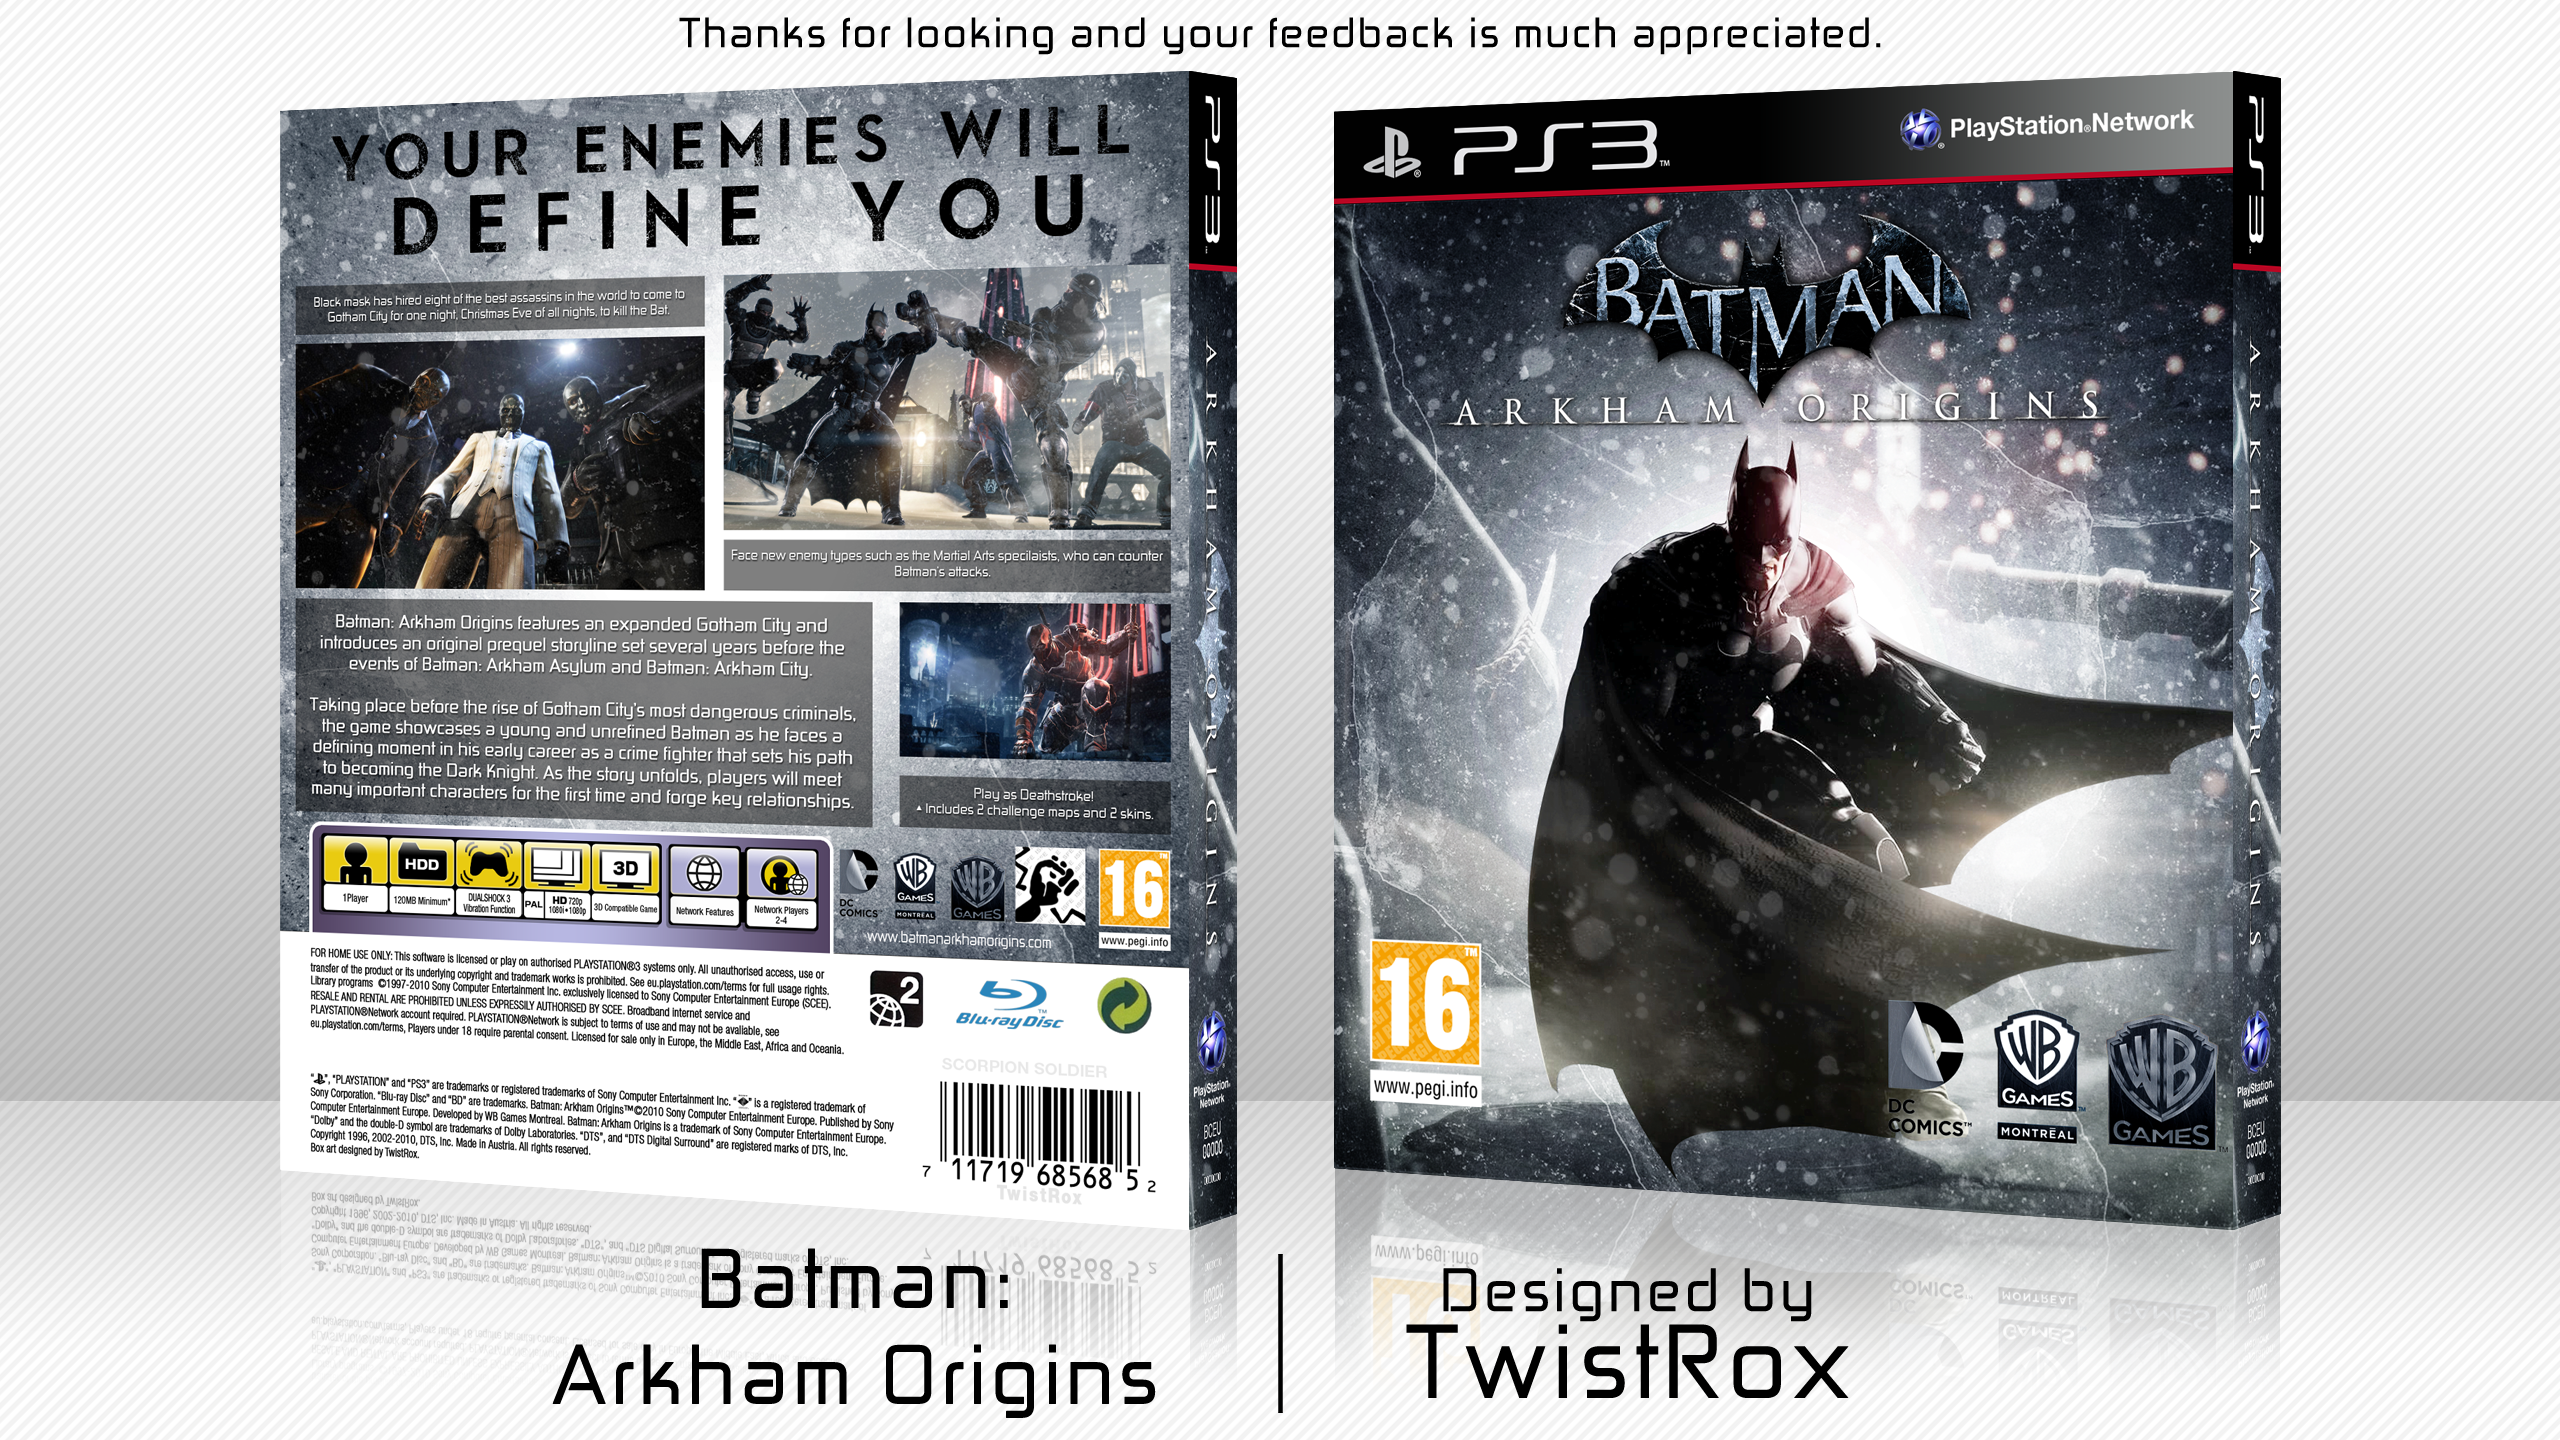 Batman: Arkham Origins box cover